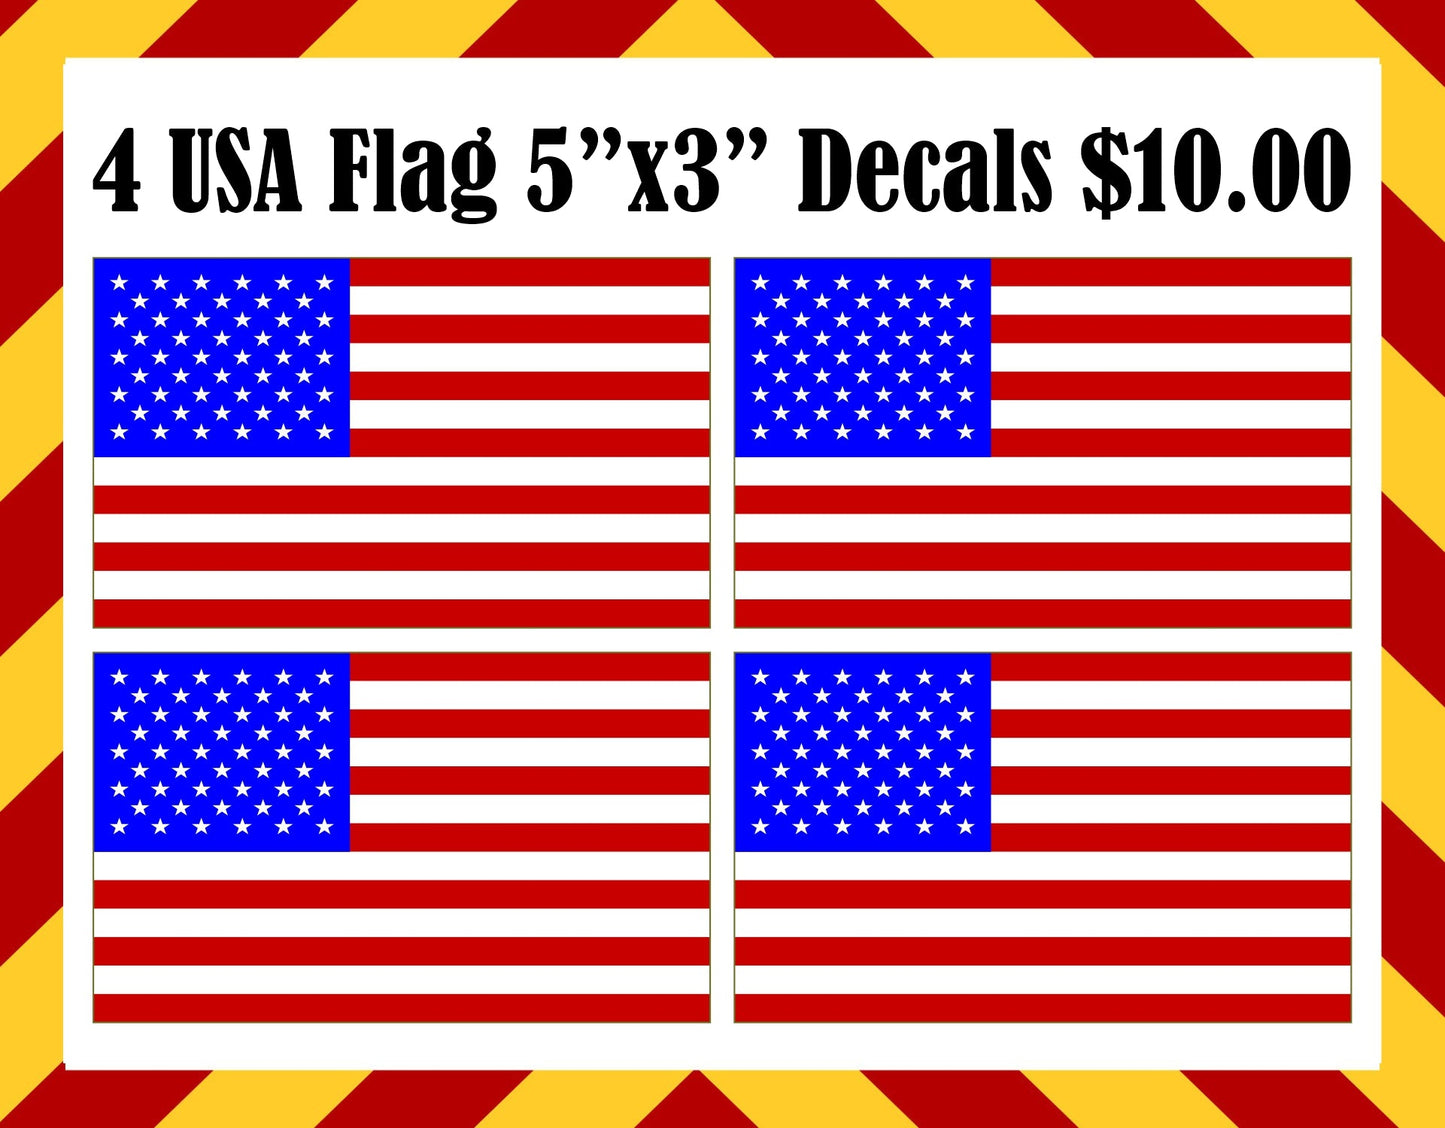 Window Decals - Set of 4 USA Flag 5"x3" Decals